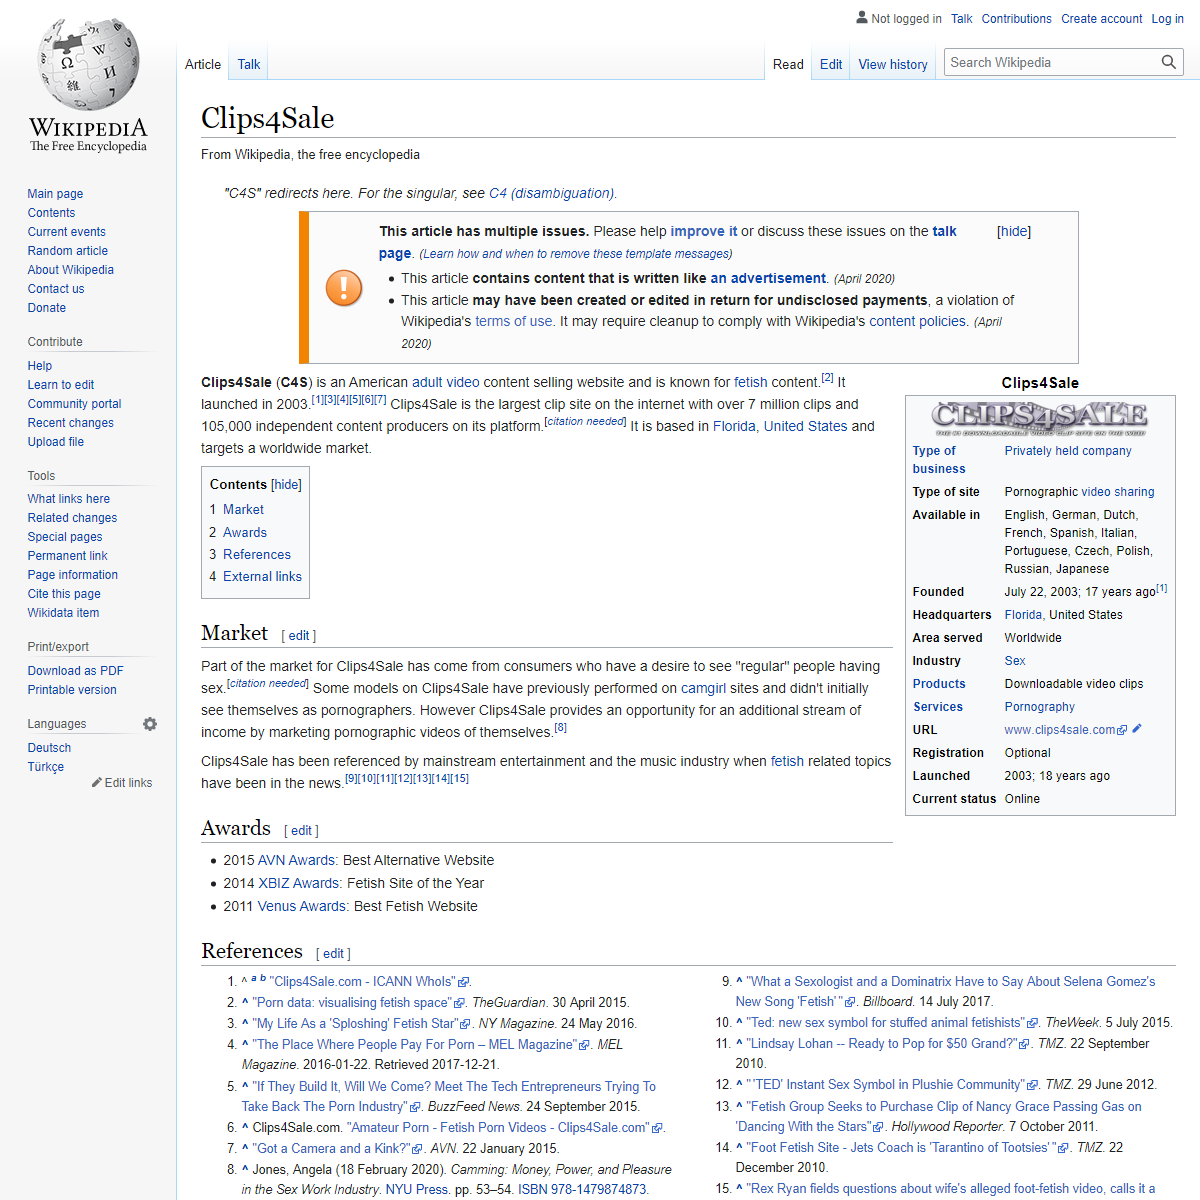 A complete backup of https://en.wikipedia.org/wiki/Clips4Sale